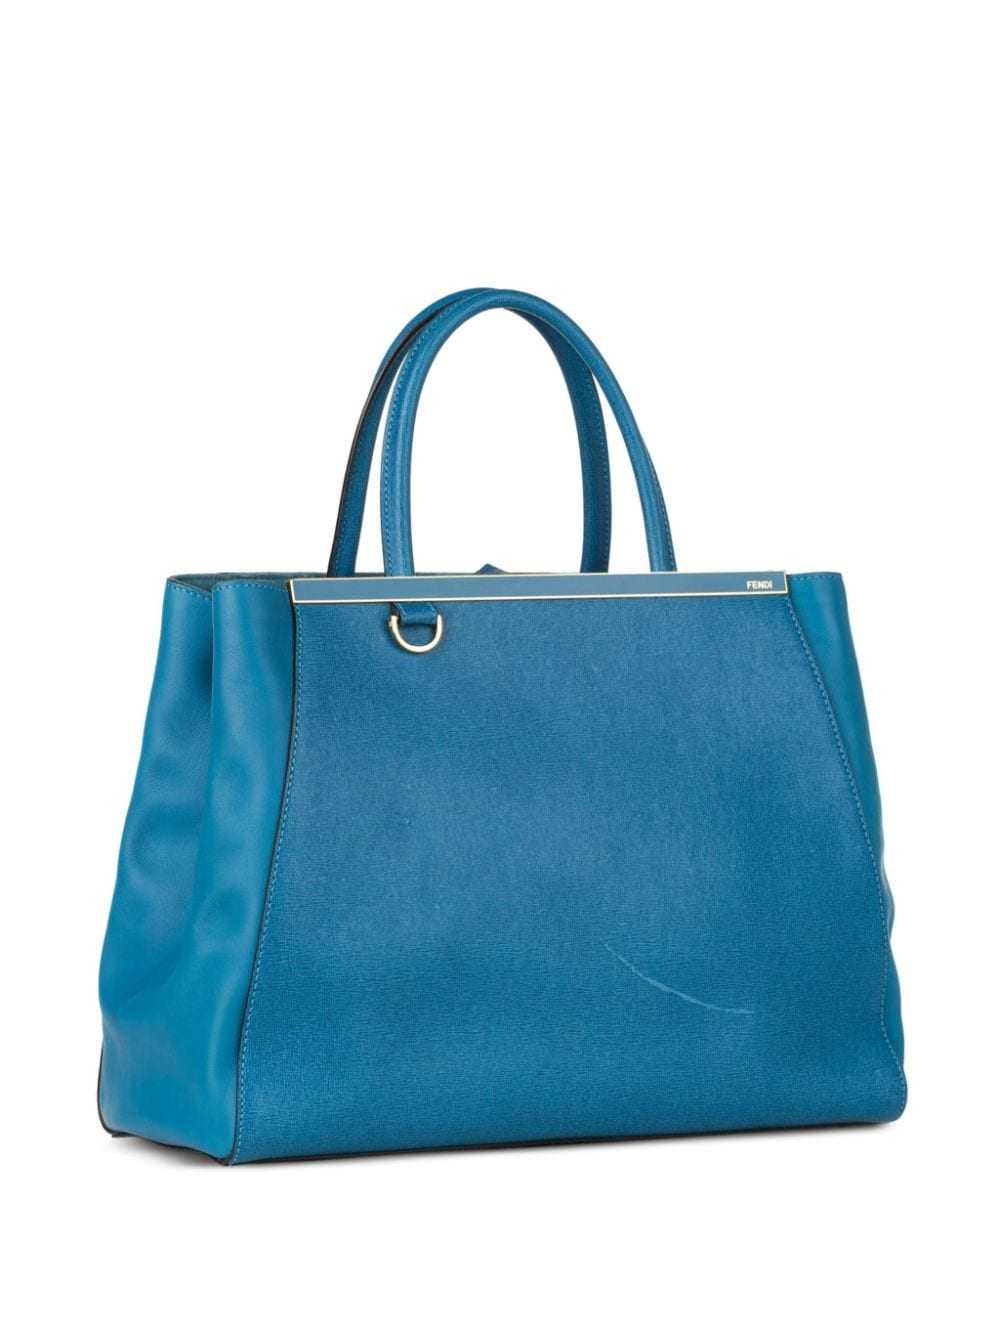 Fendi Pre-Owned 2Jours satchel - Blue - image 3